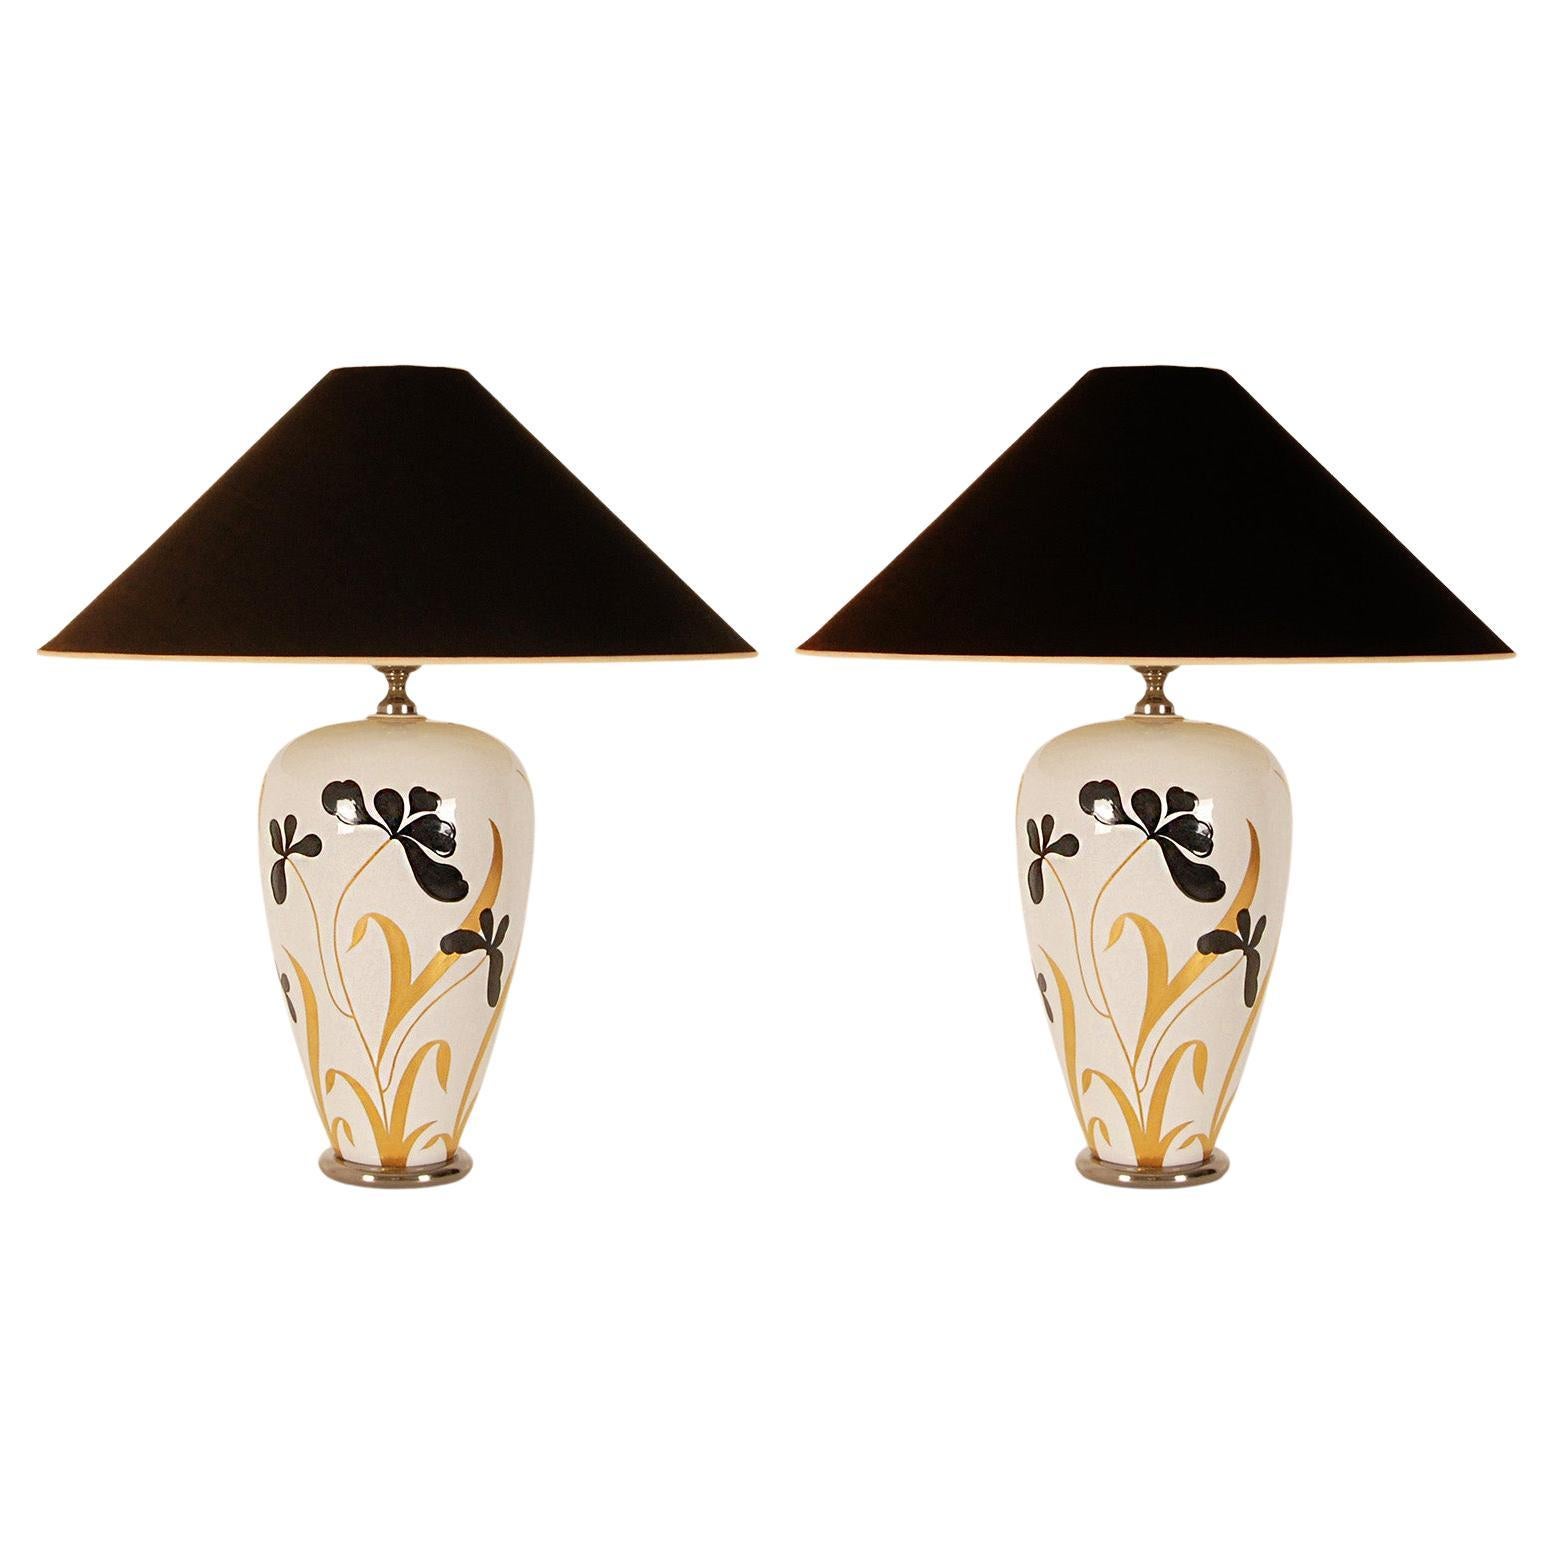 Vintage 1970s Italian Ceramic Vase Lamps Gold Black White Porcelain, a Pair For Sale